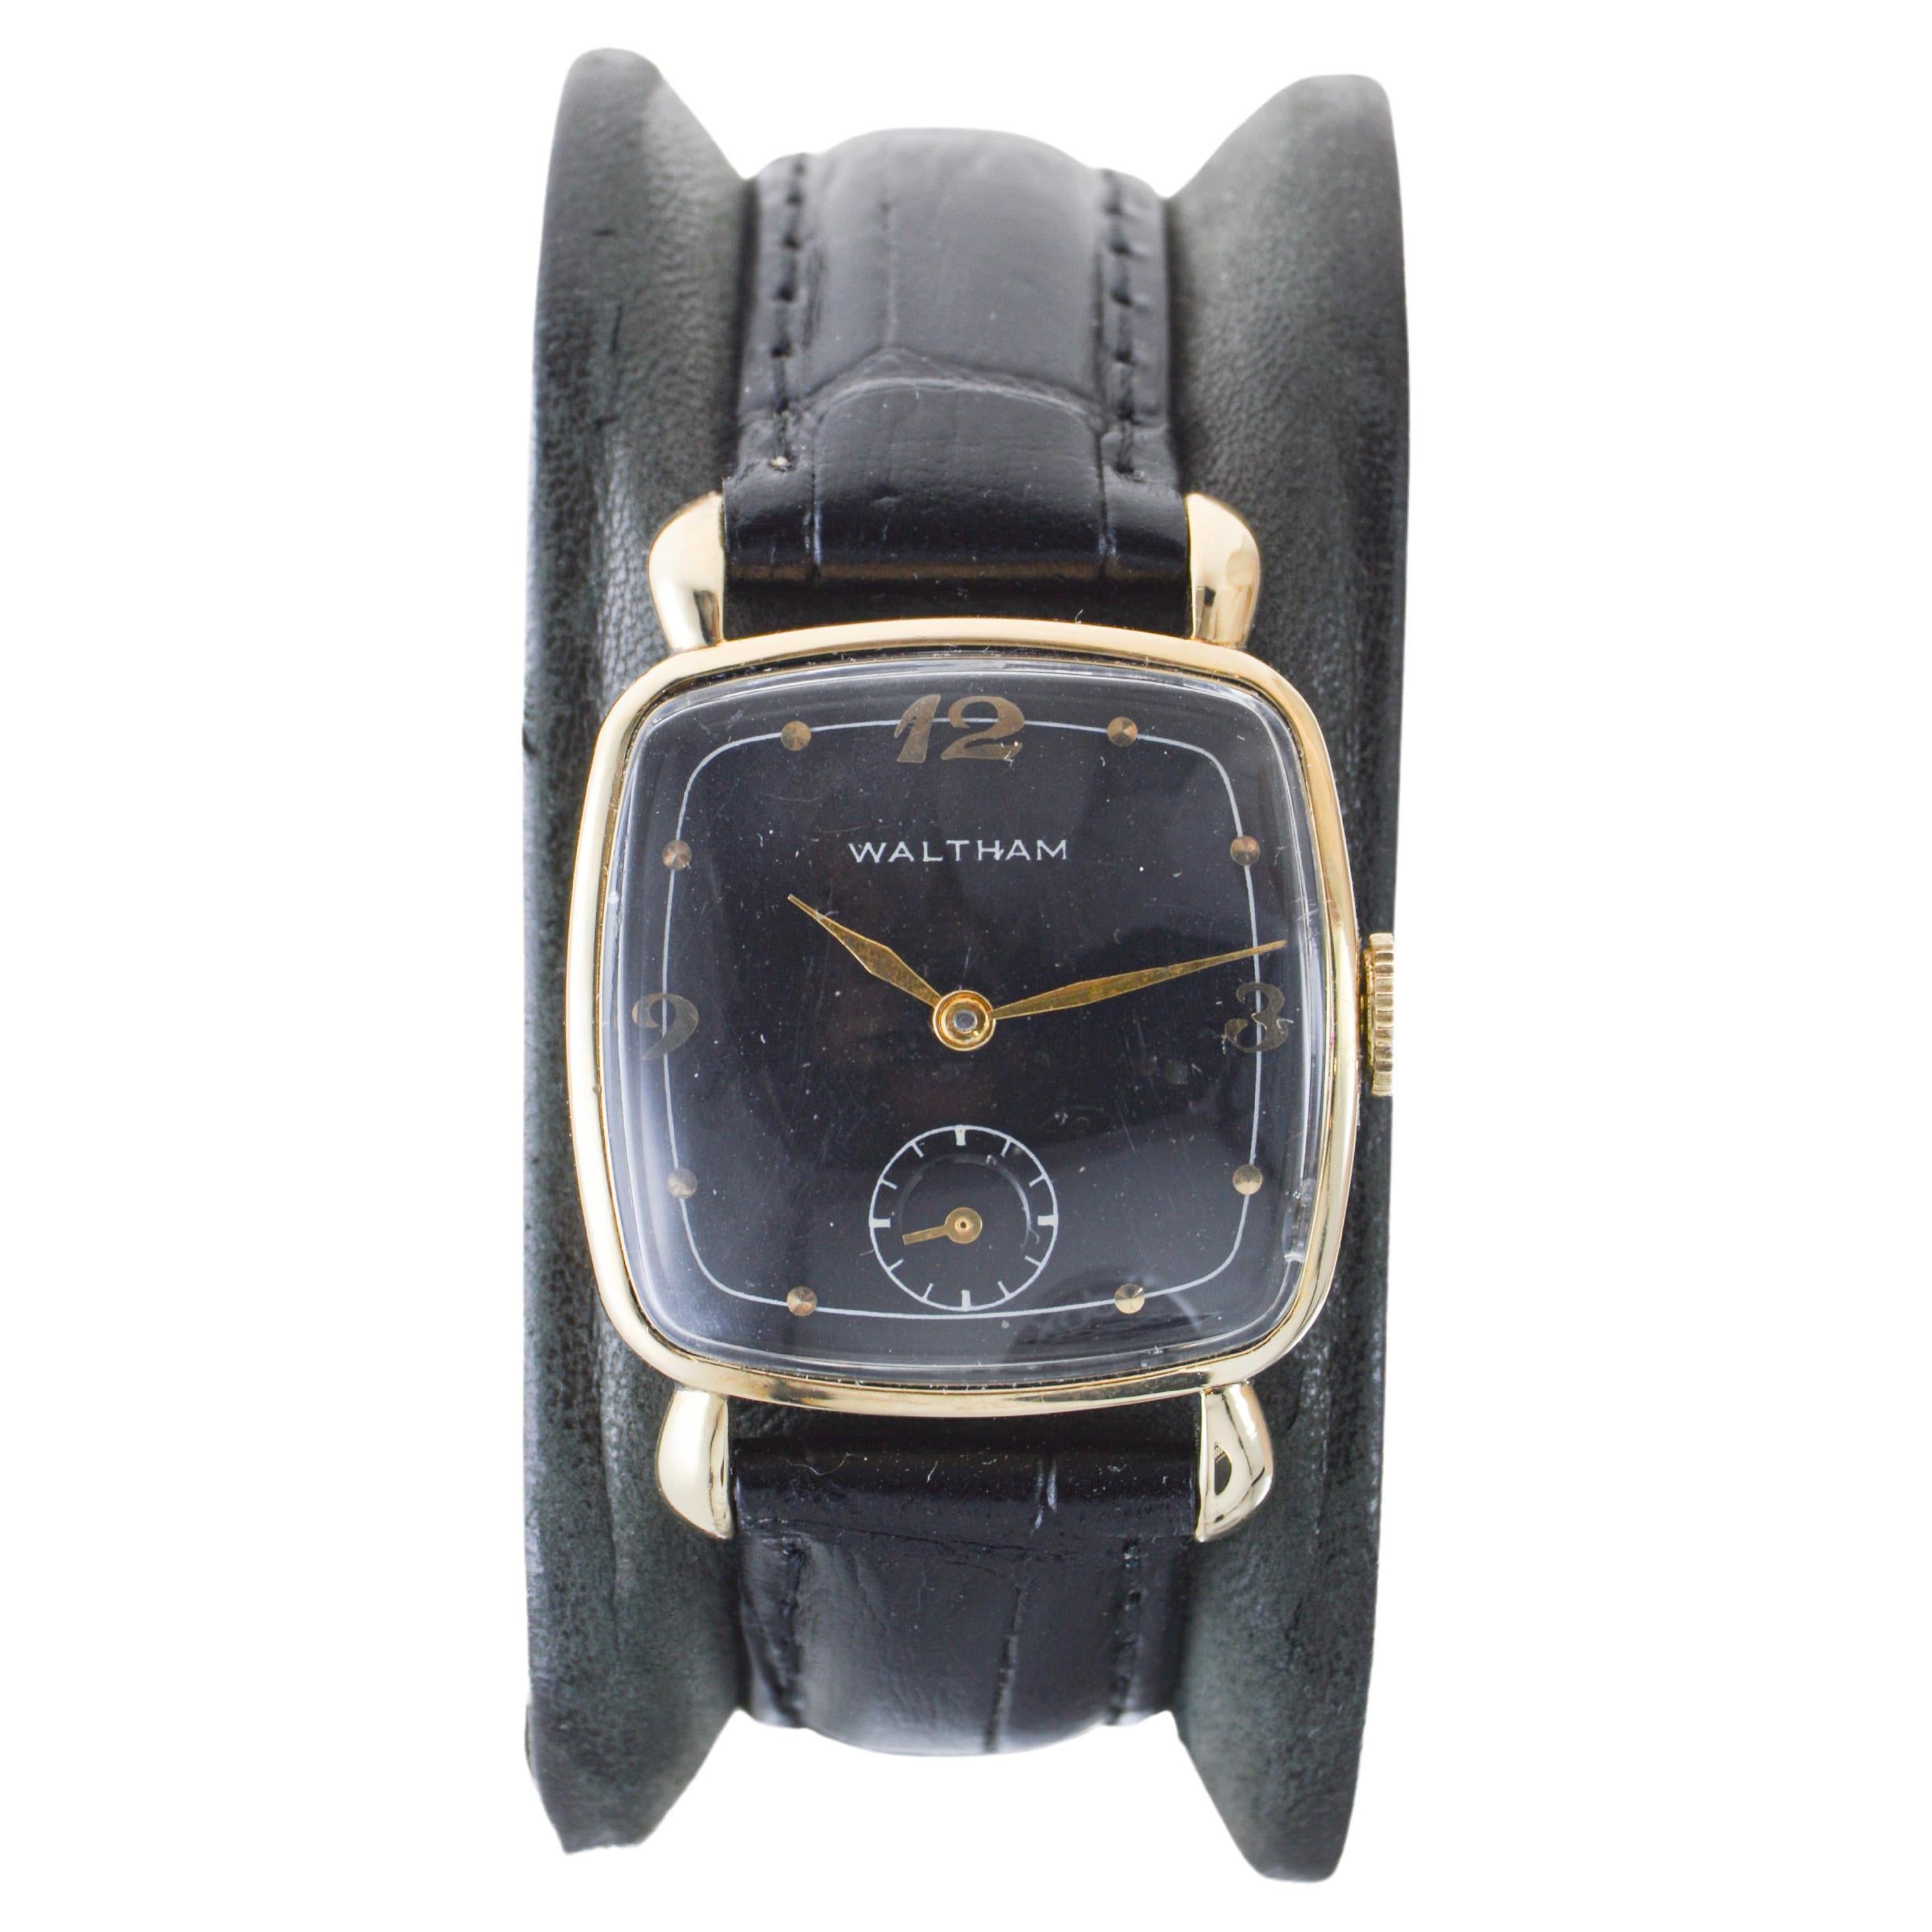 Waltham 14k Art Deco Cushion Shaped Watch with Original Rare Black Dial